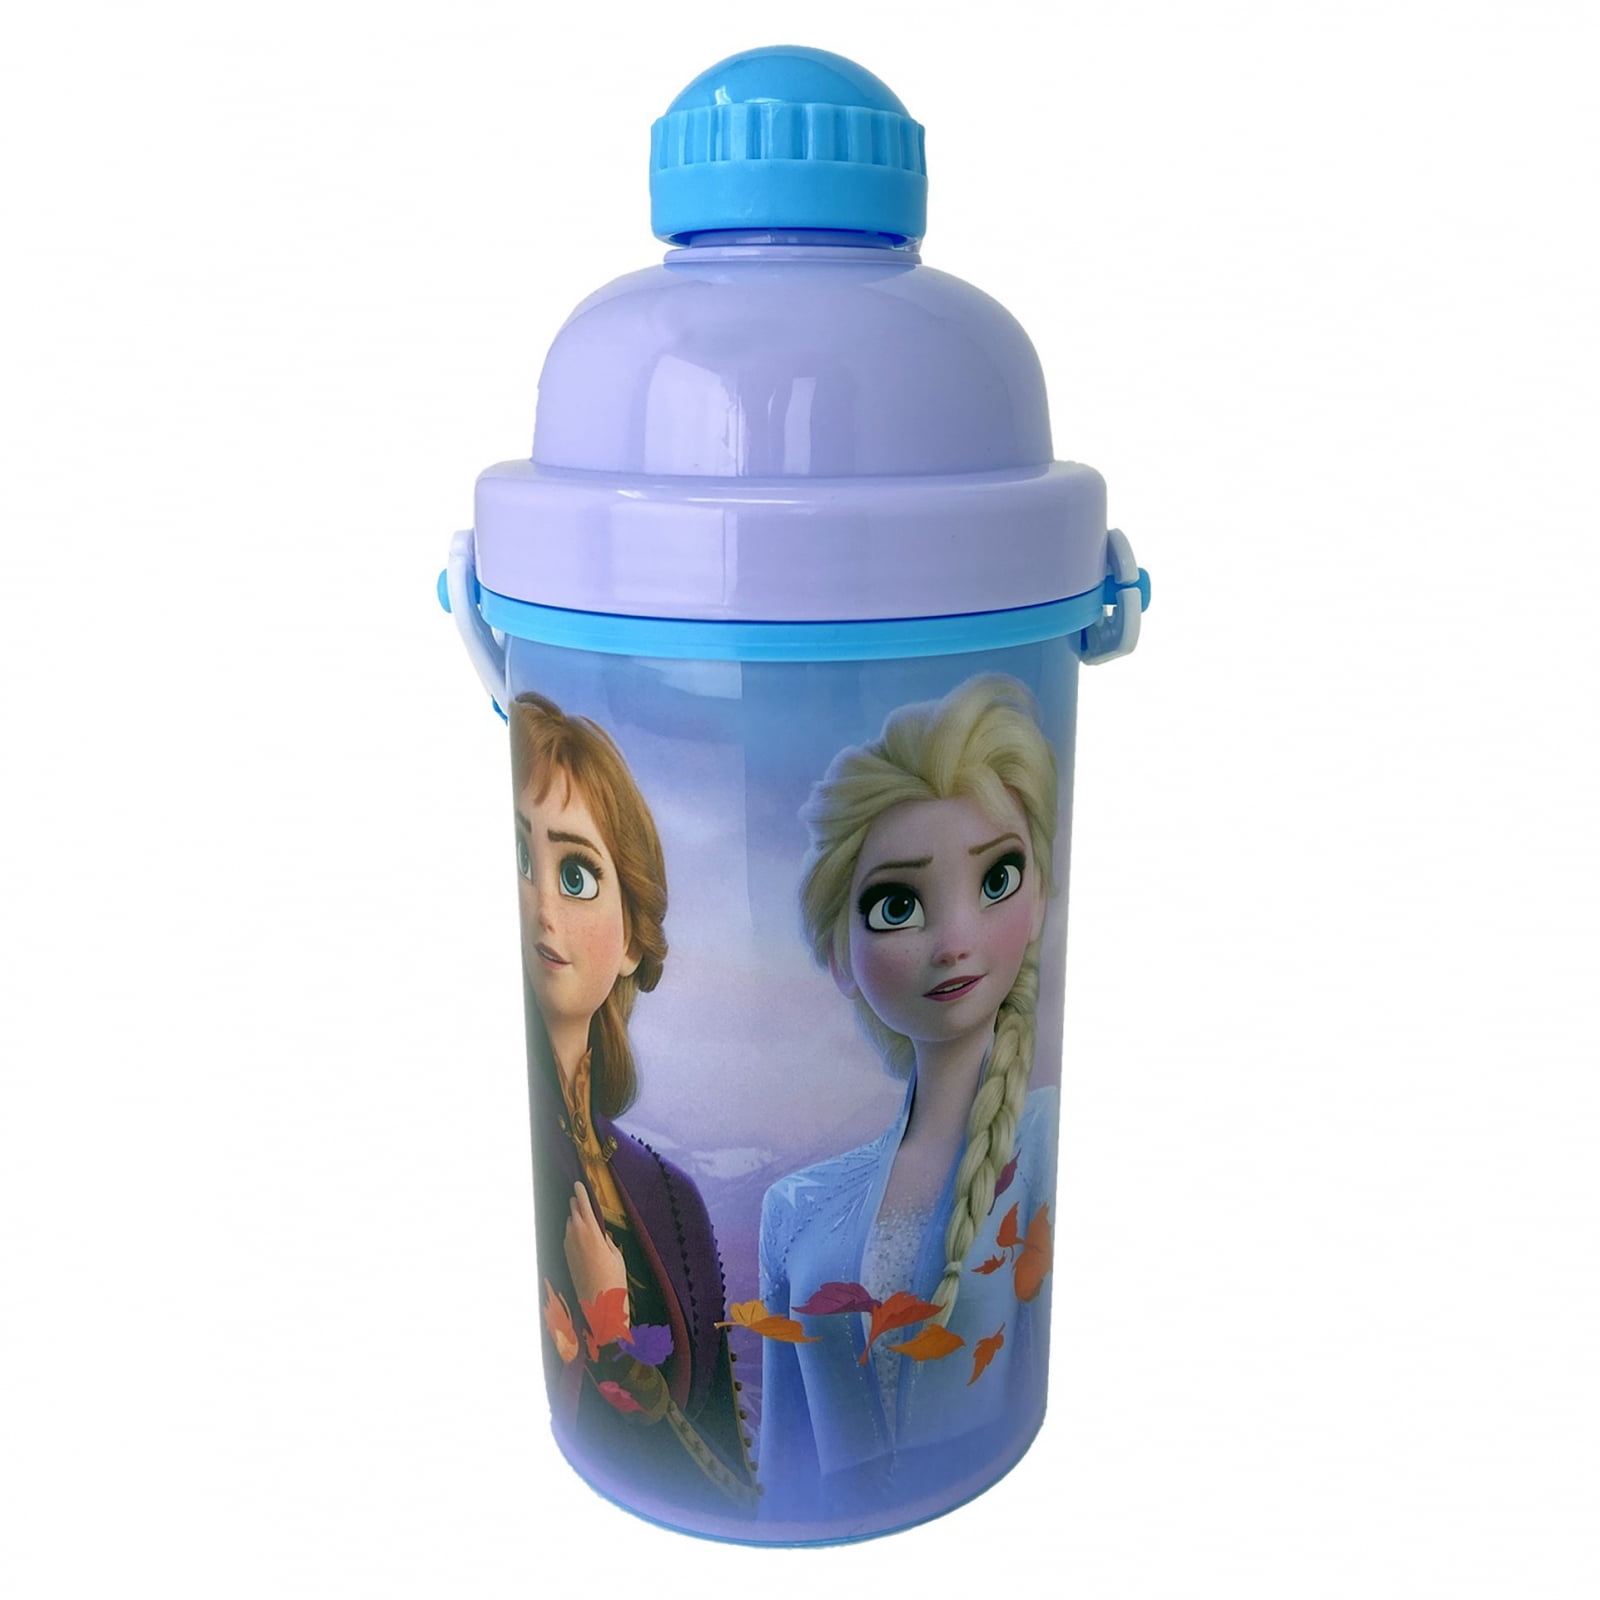 Frozen II Girls Canteen Water Bottle Anna Elsa Pop Up Lid Shoulder